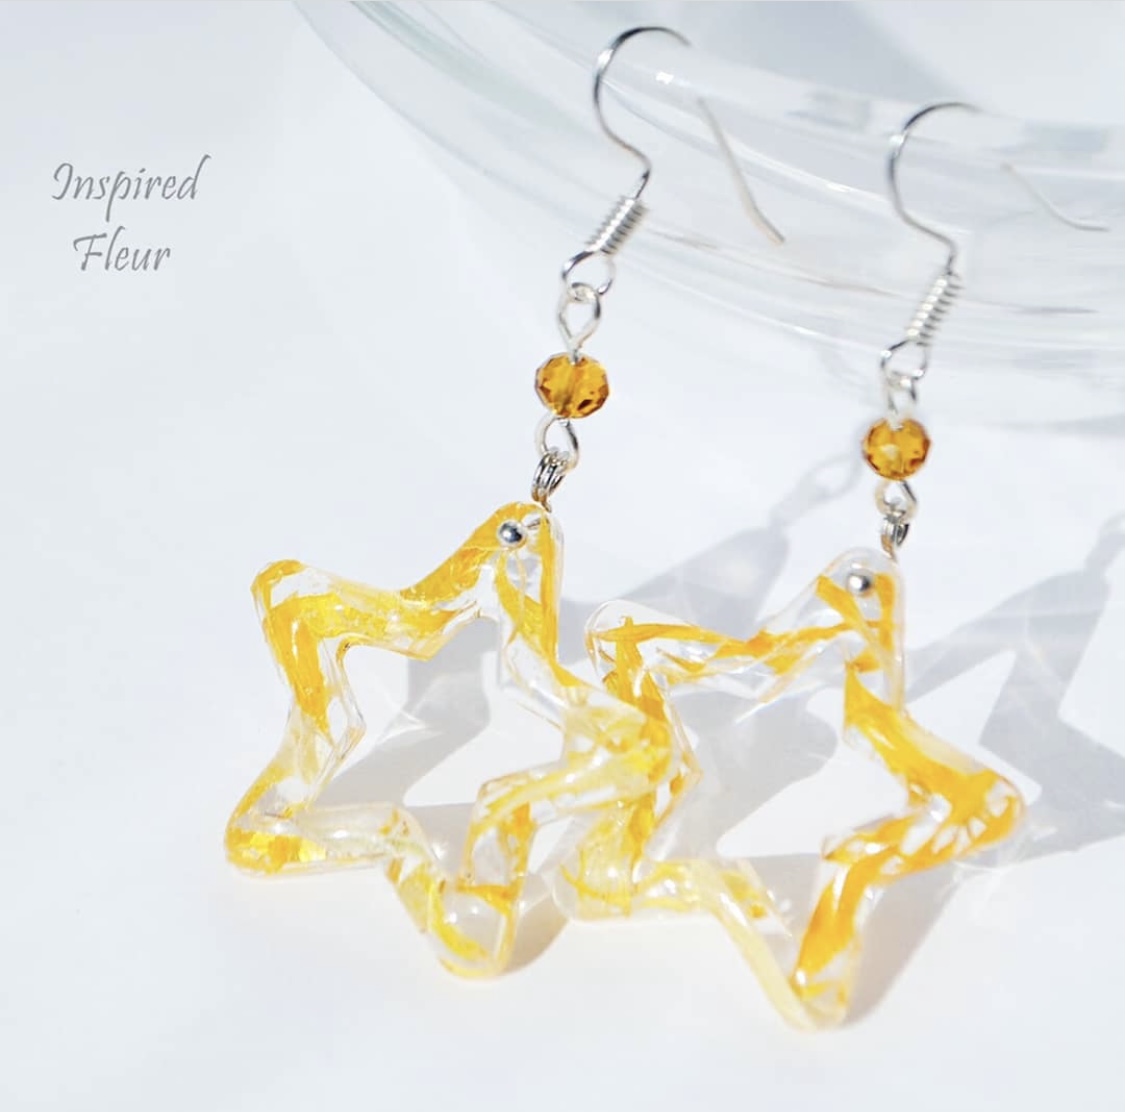 Cool star shape earrings with bright calendula petals, so juicy